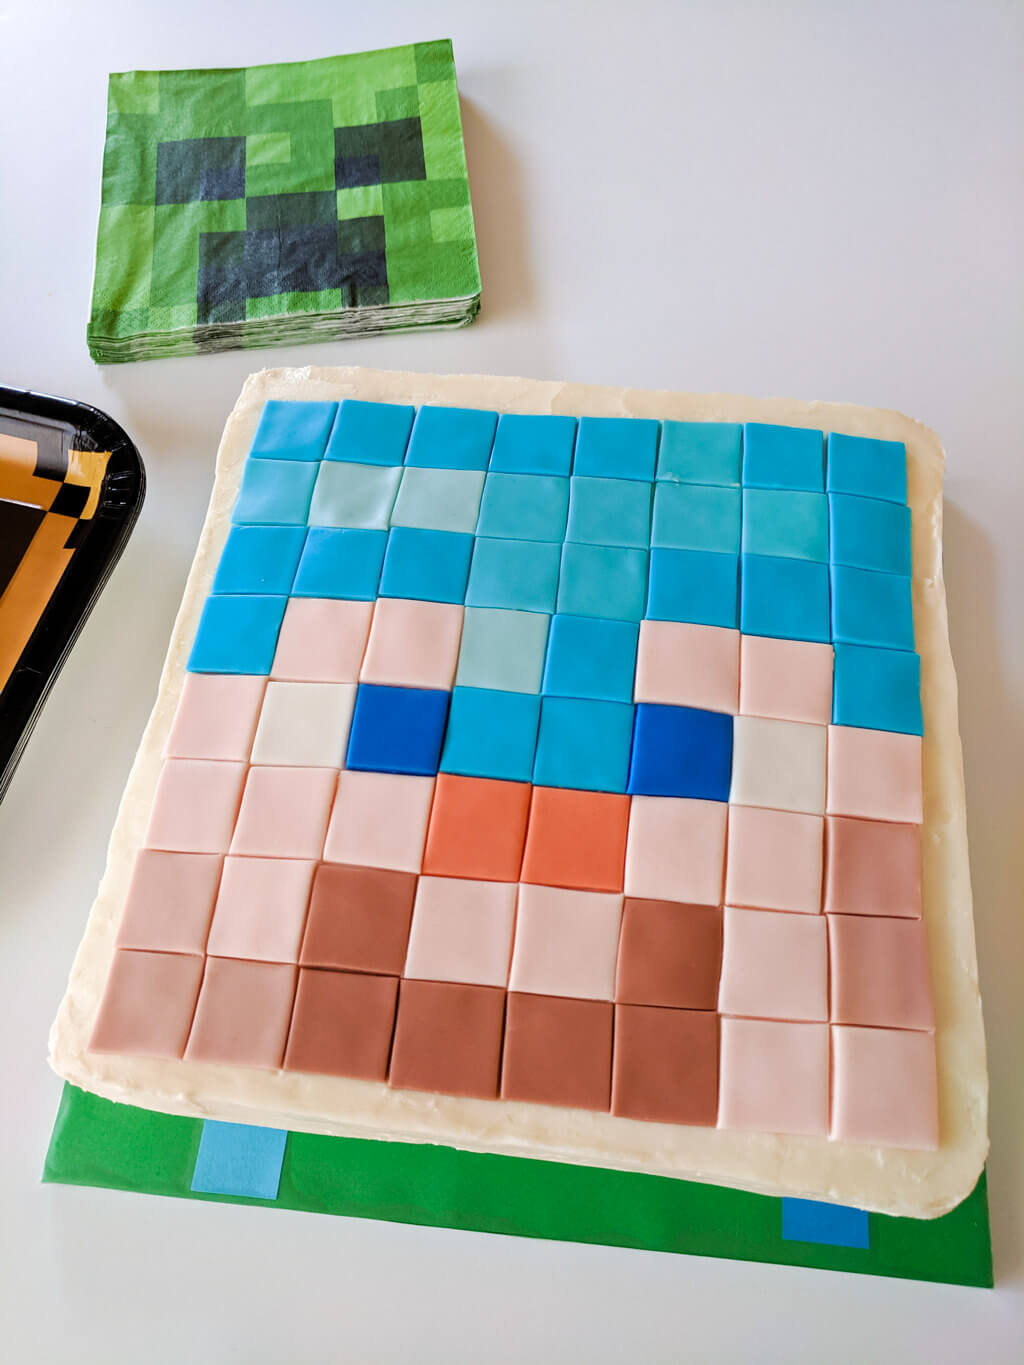 Best Minecraft Theme Cake In Mumbai | Order Online